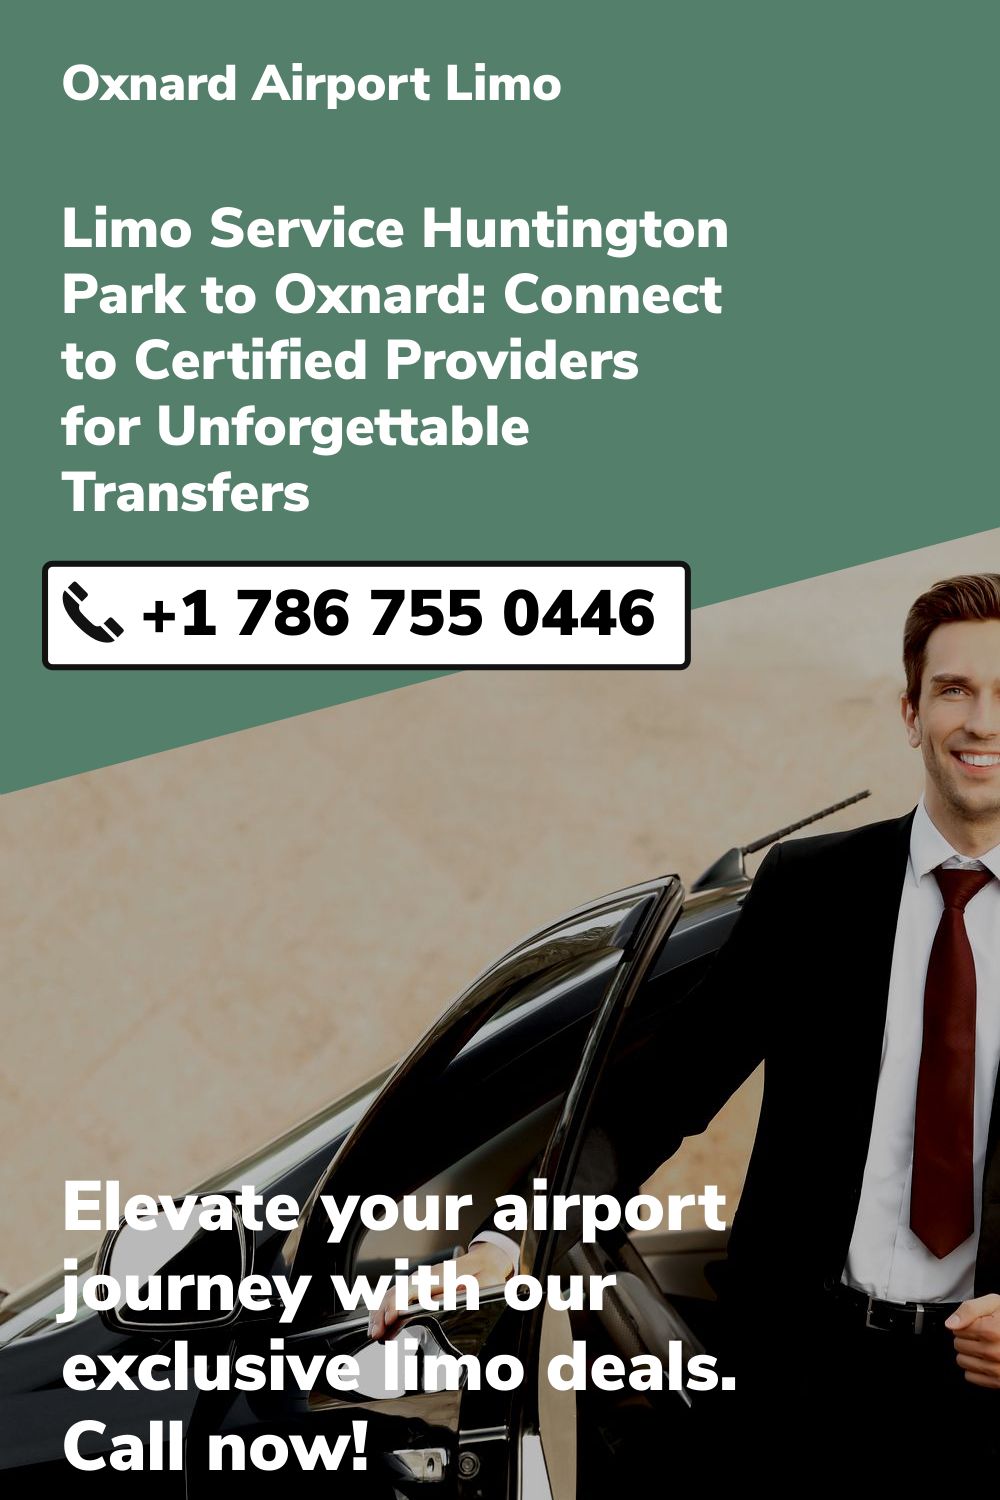 Oxnard Airport Limo